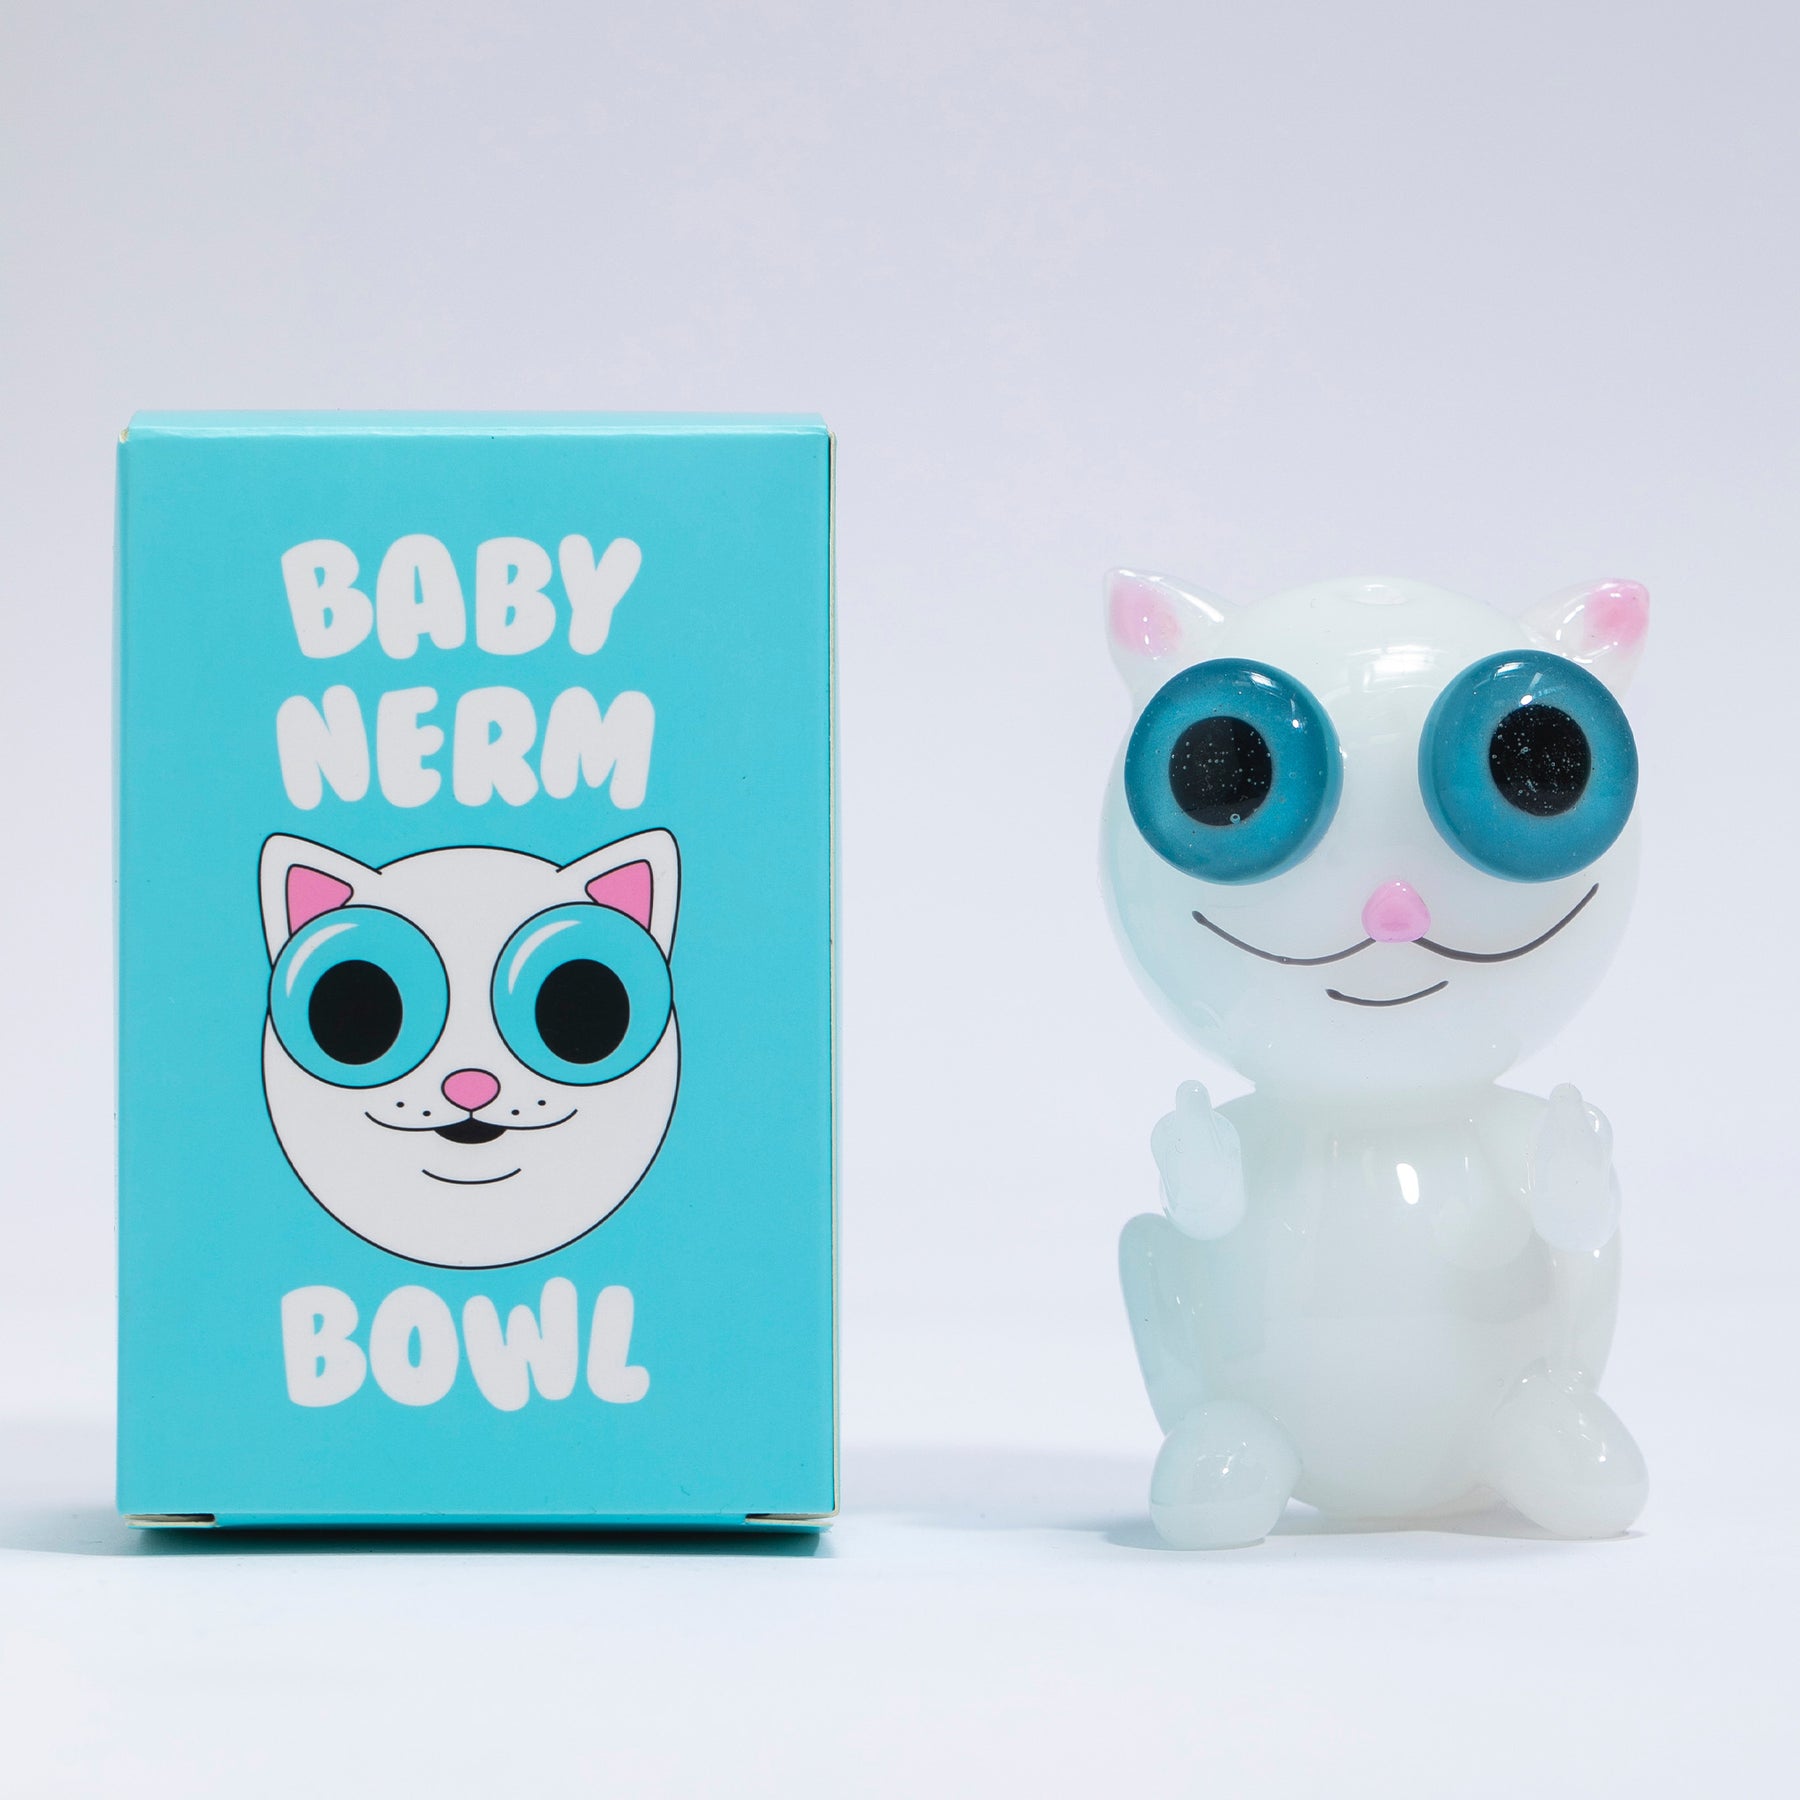 Baby Nerm Bowl